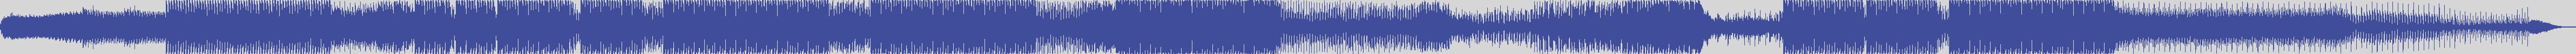 atomic_recordings [AR017] Antolini I-progress, Dj Phunk - Keep In Touch [Original Mix] audio wave form